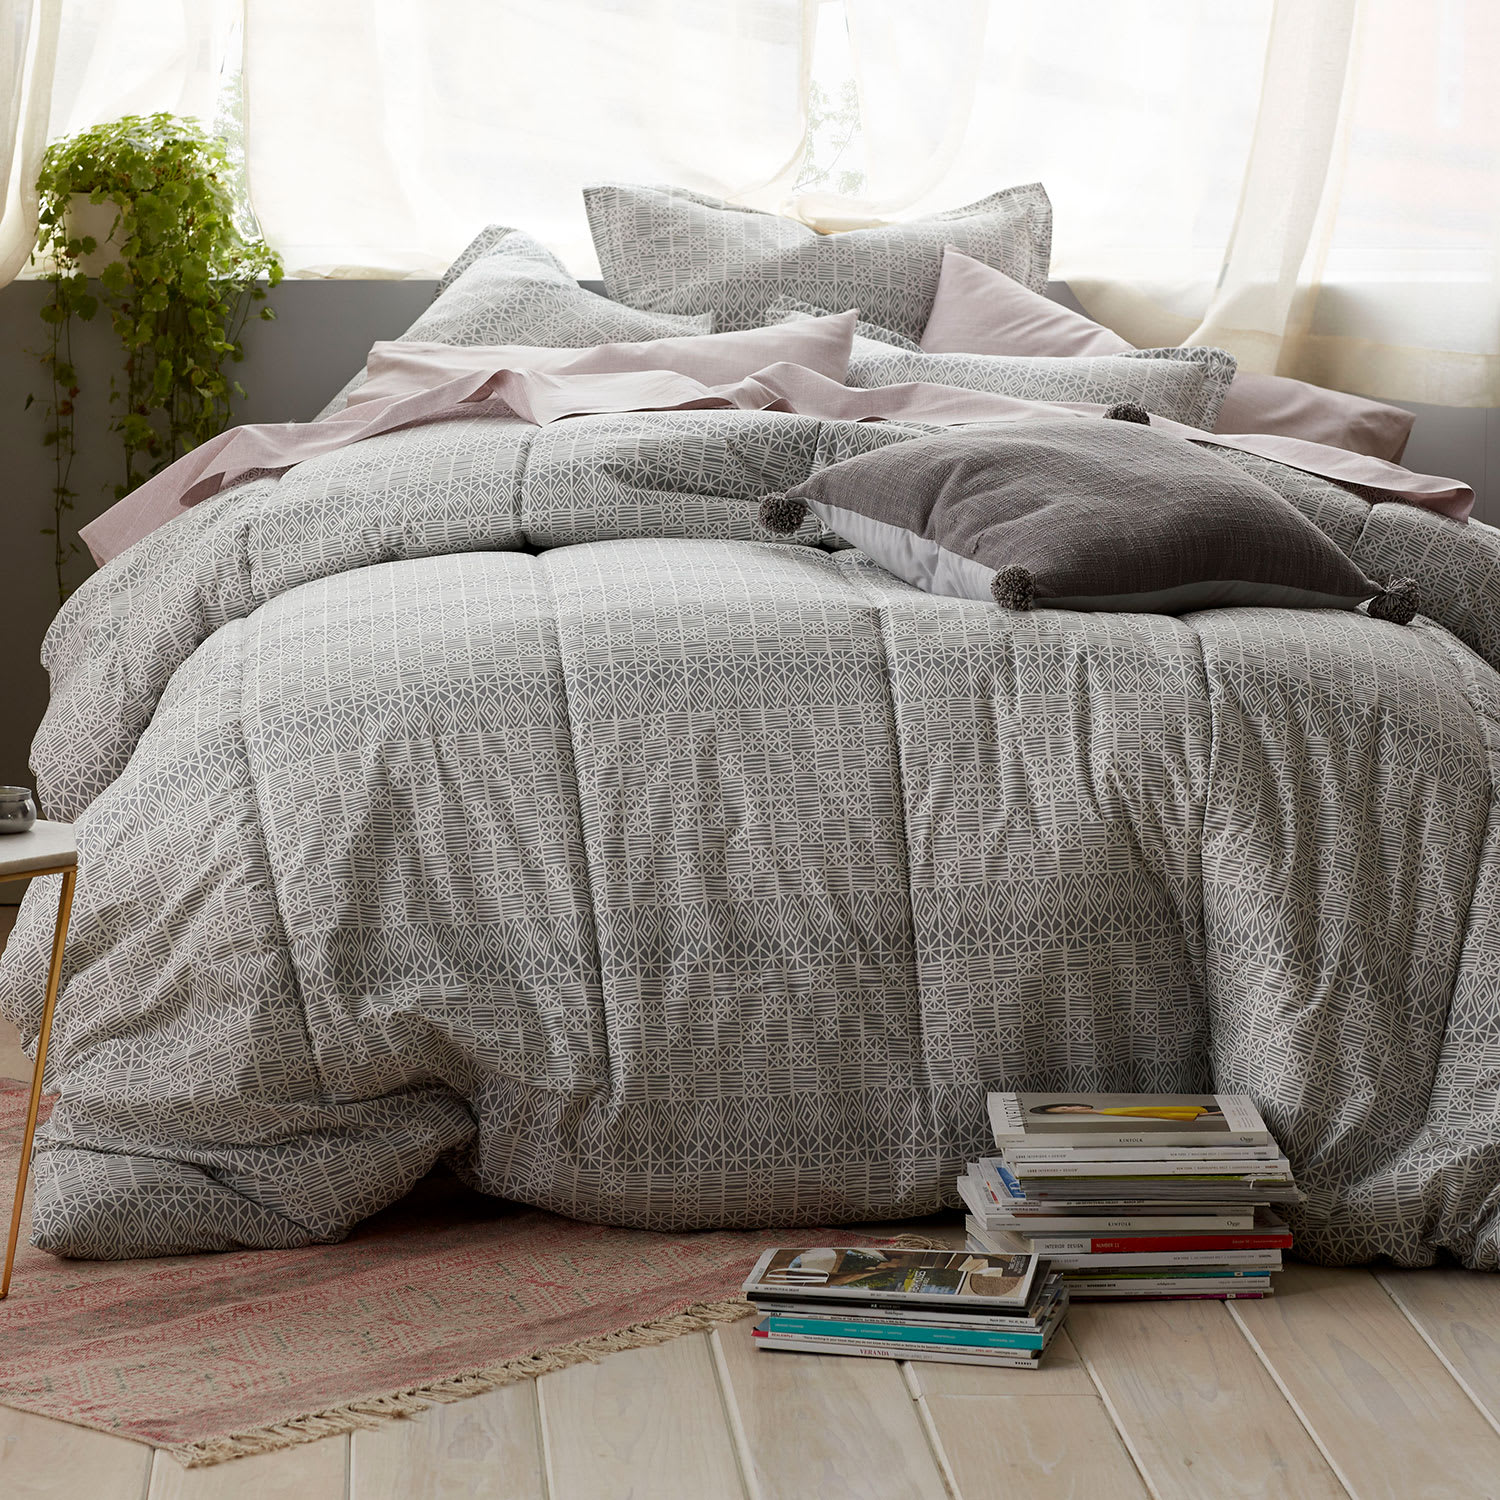 Cstudio Home Basket Geo Cotton Percale Comforter Set - Gray